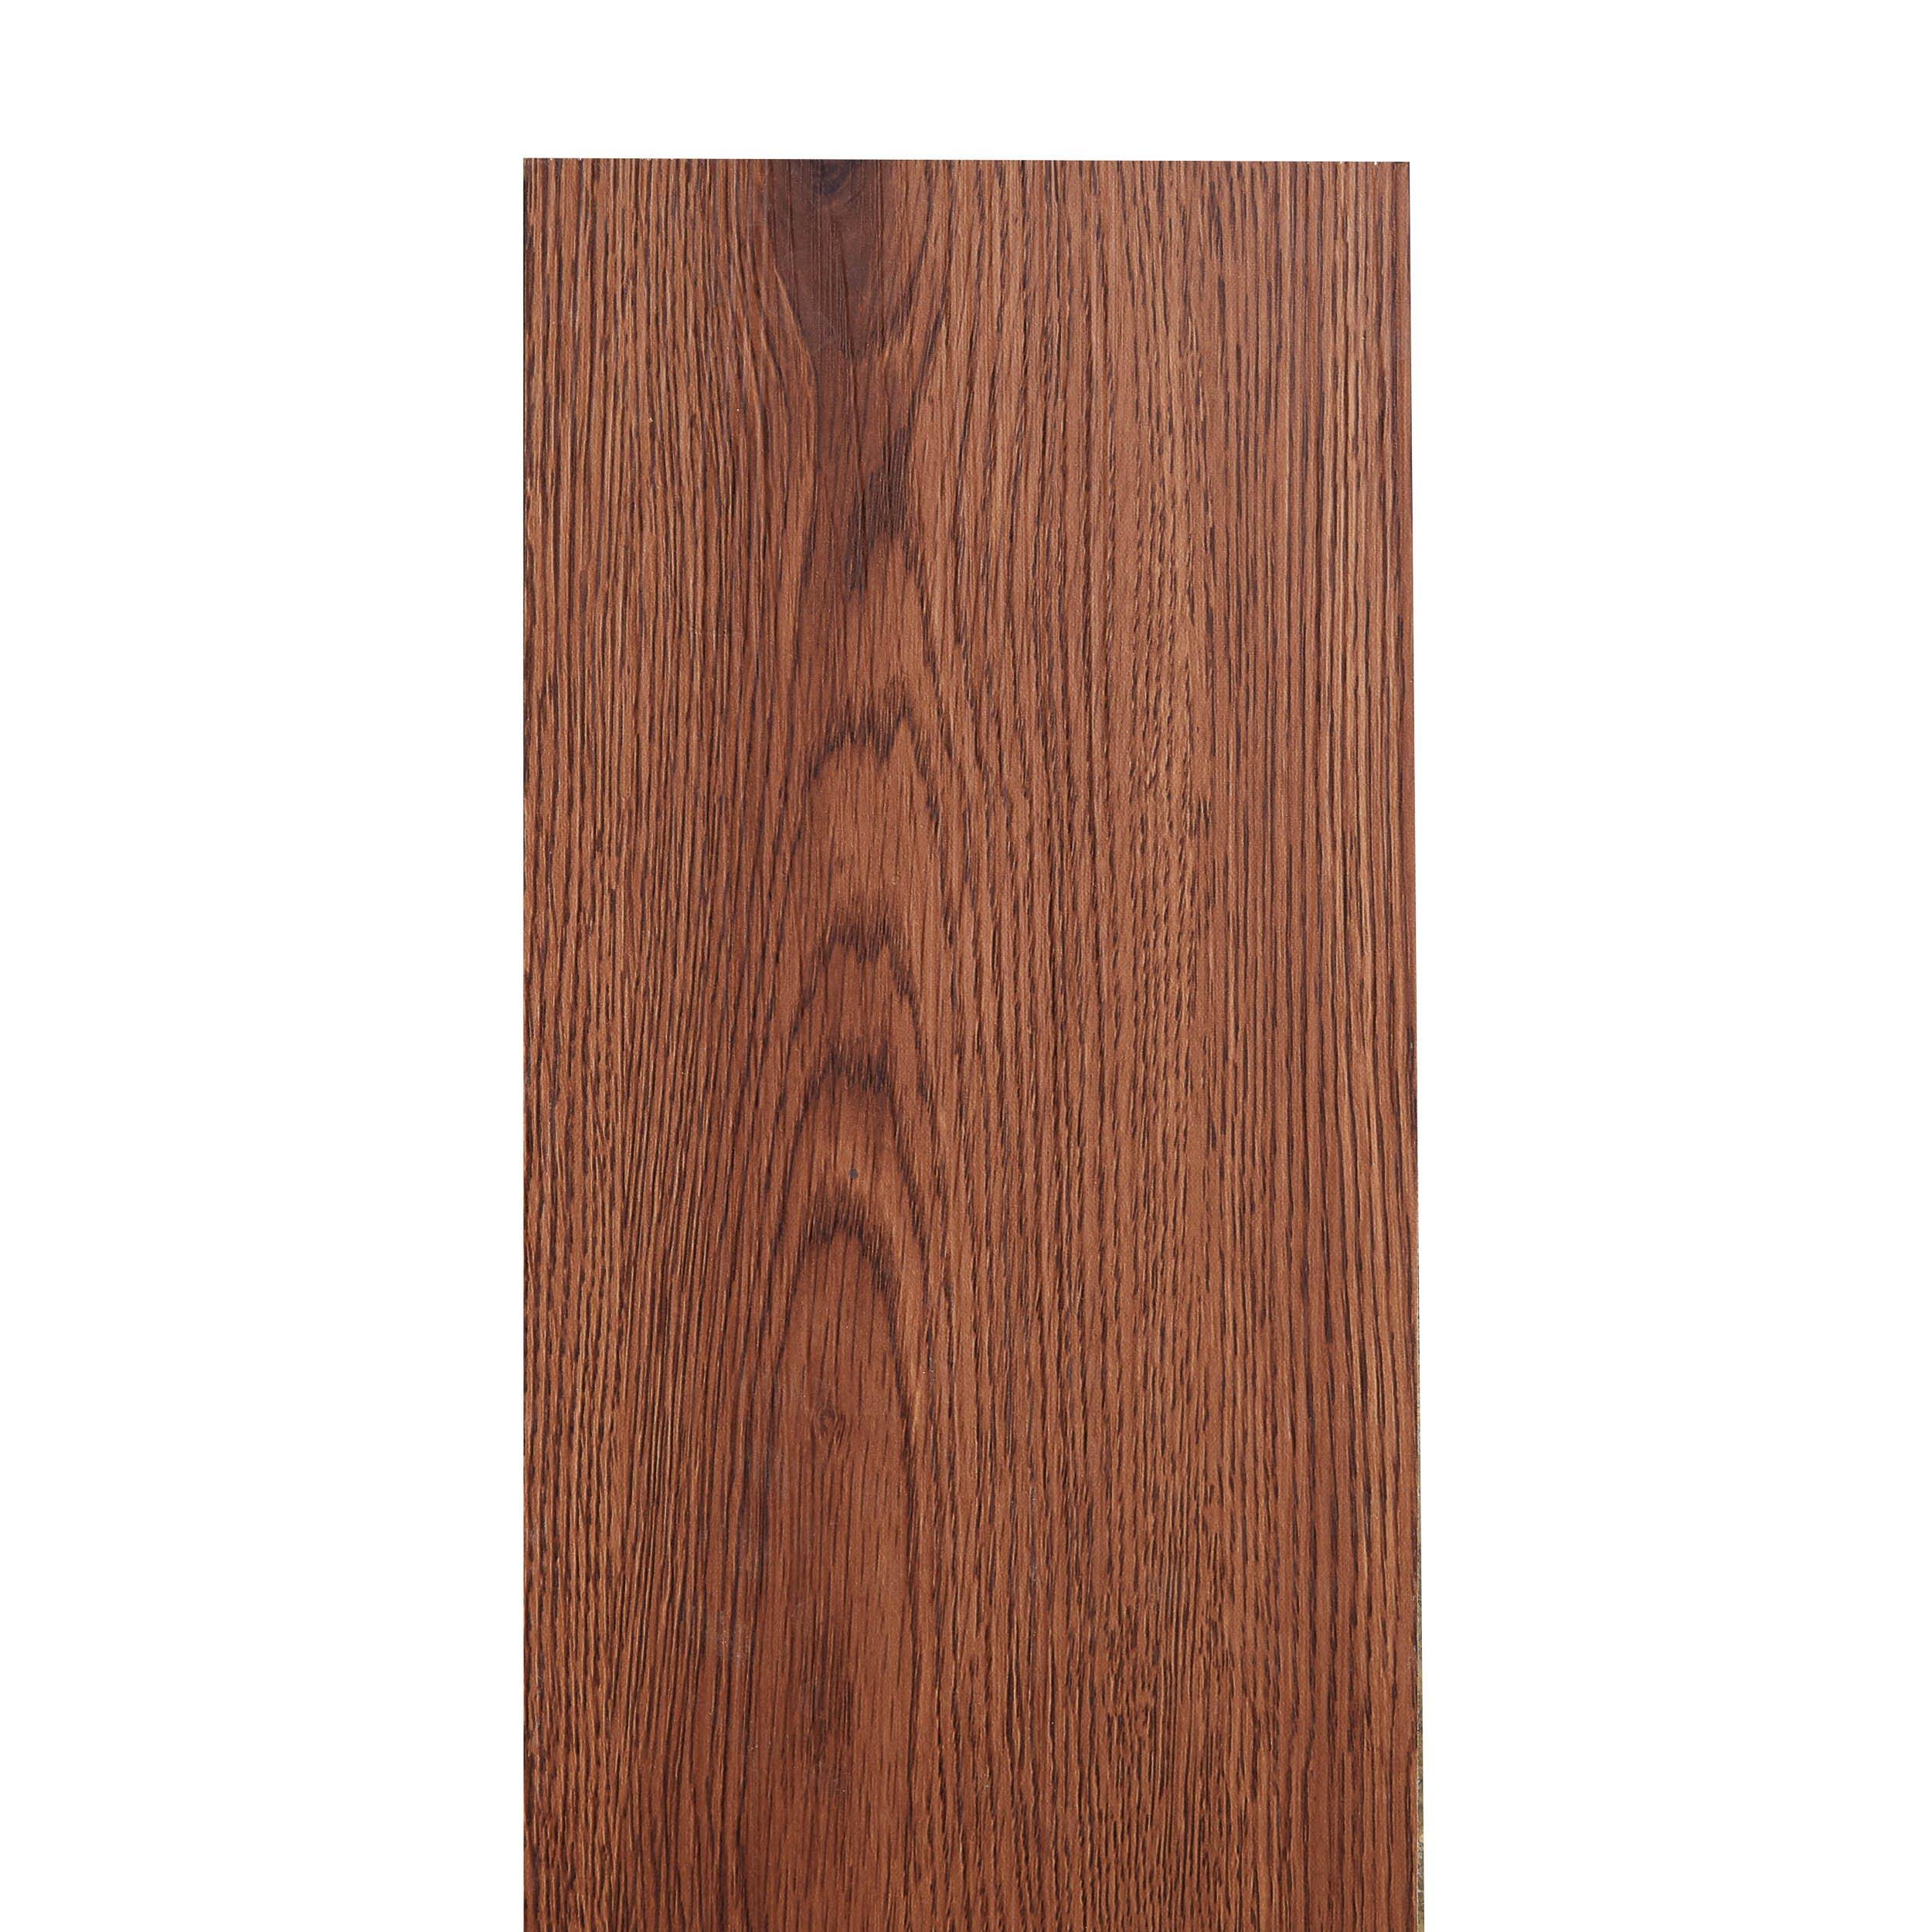 Cherry Vinyl Plank Tile 2mm 100582857 Floor And Decor